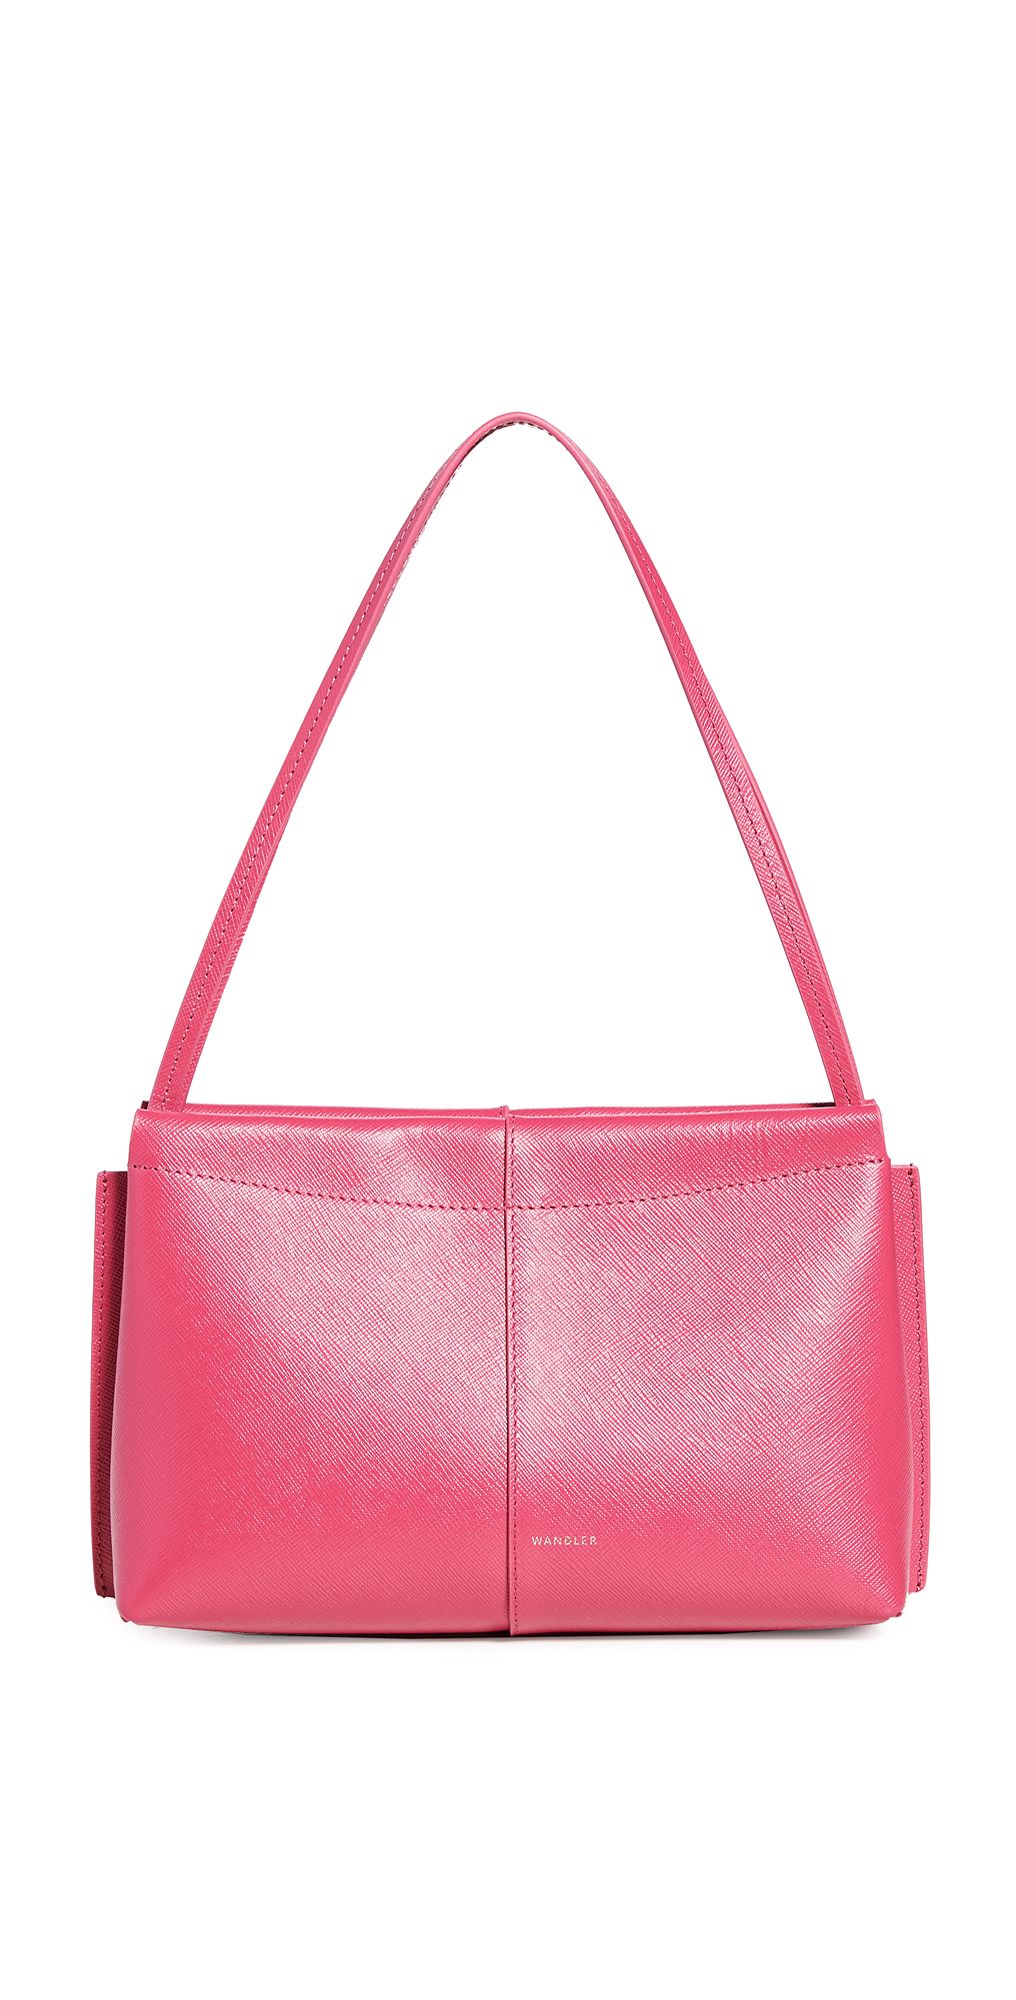 Wandler Carly Mini Bag | Shopbop